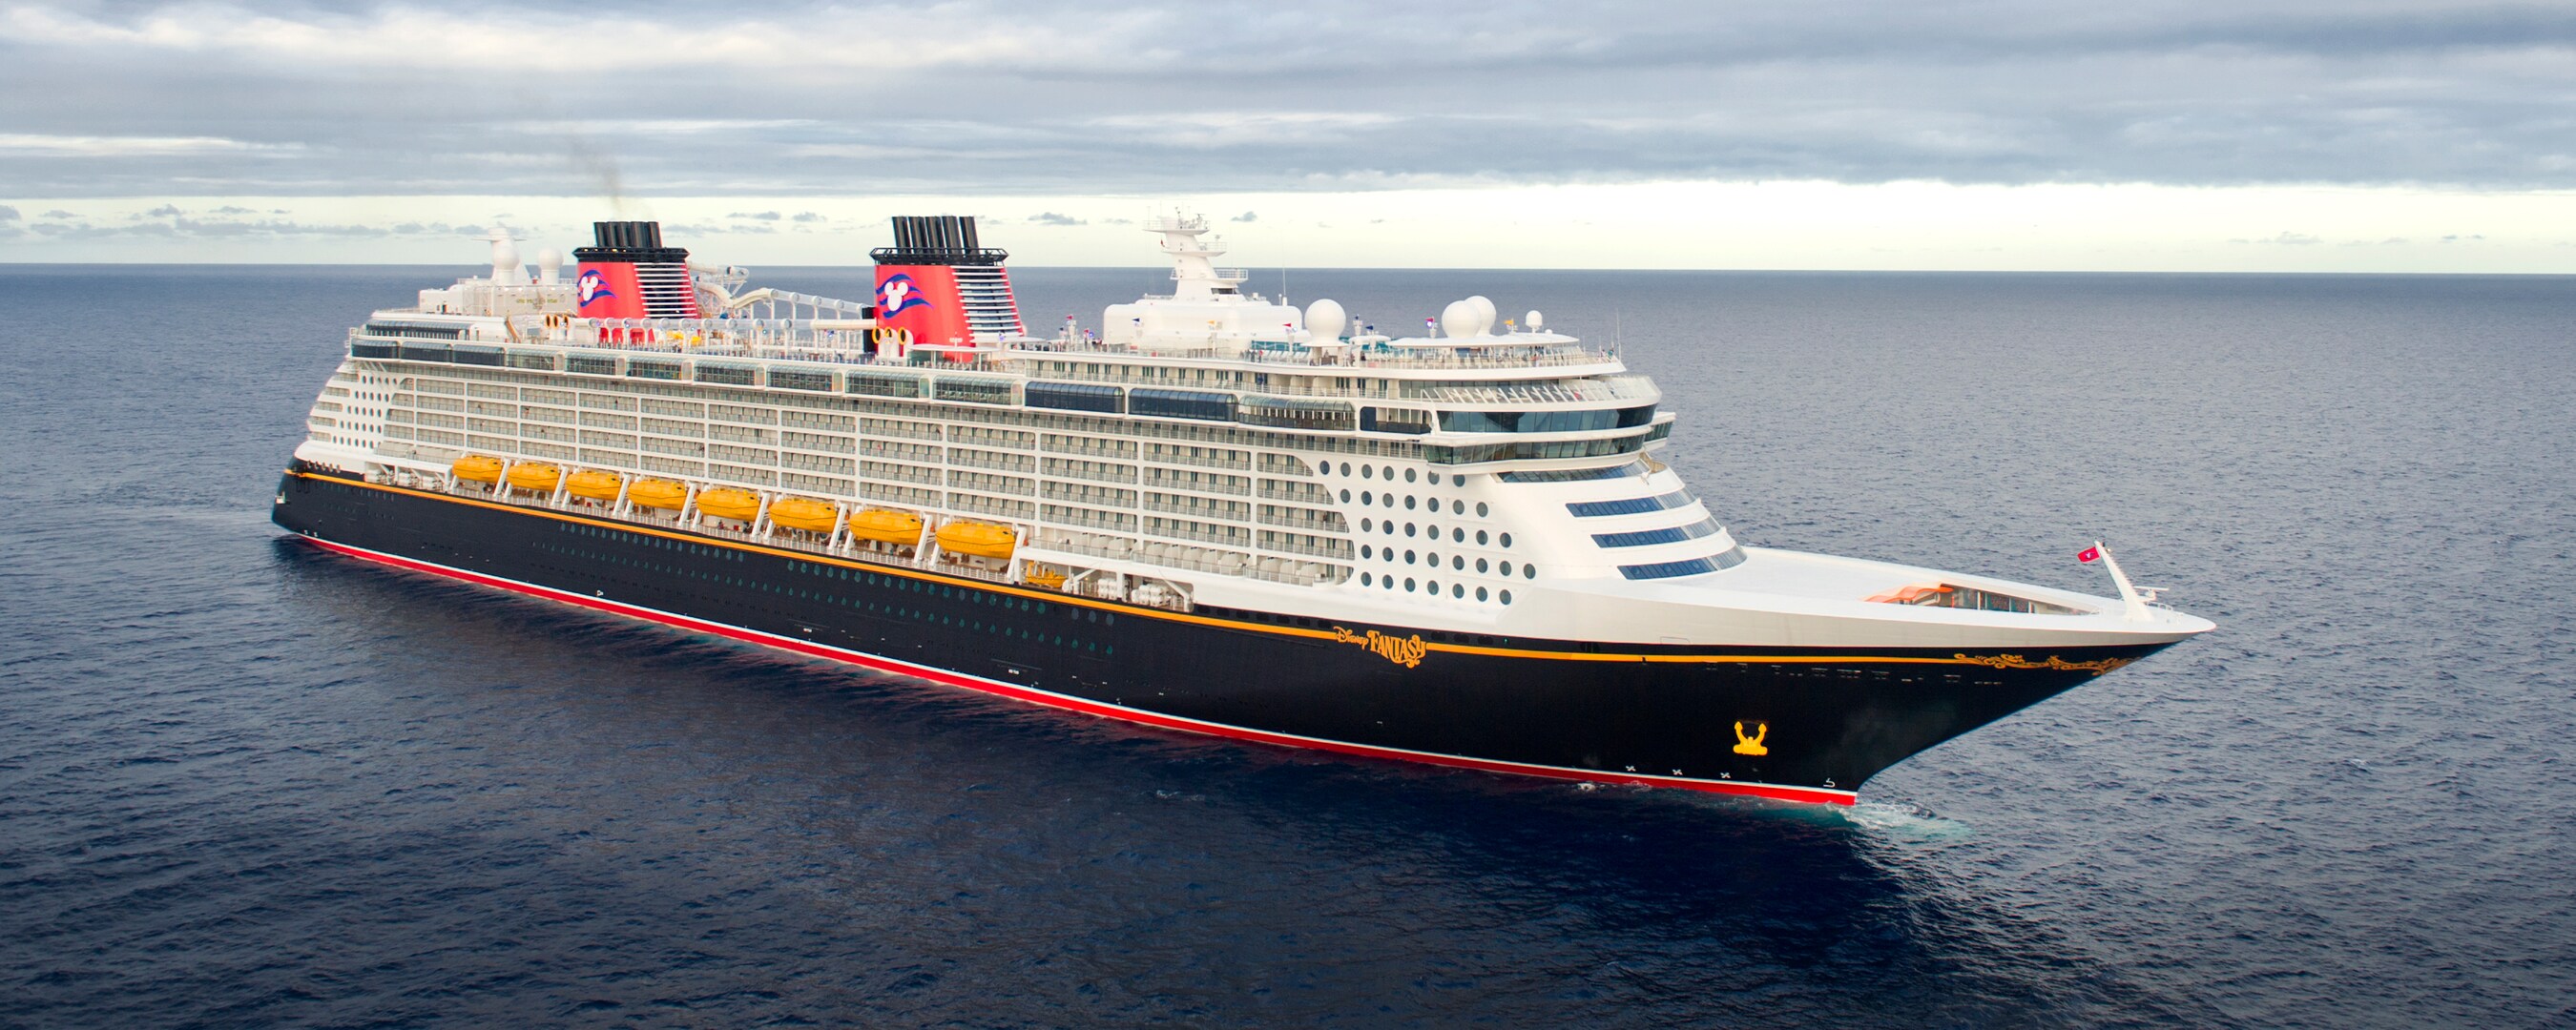 Disney Fantasy Ships Disney Cruise Line